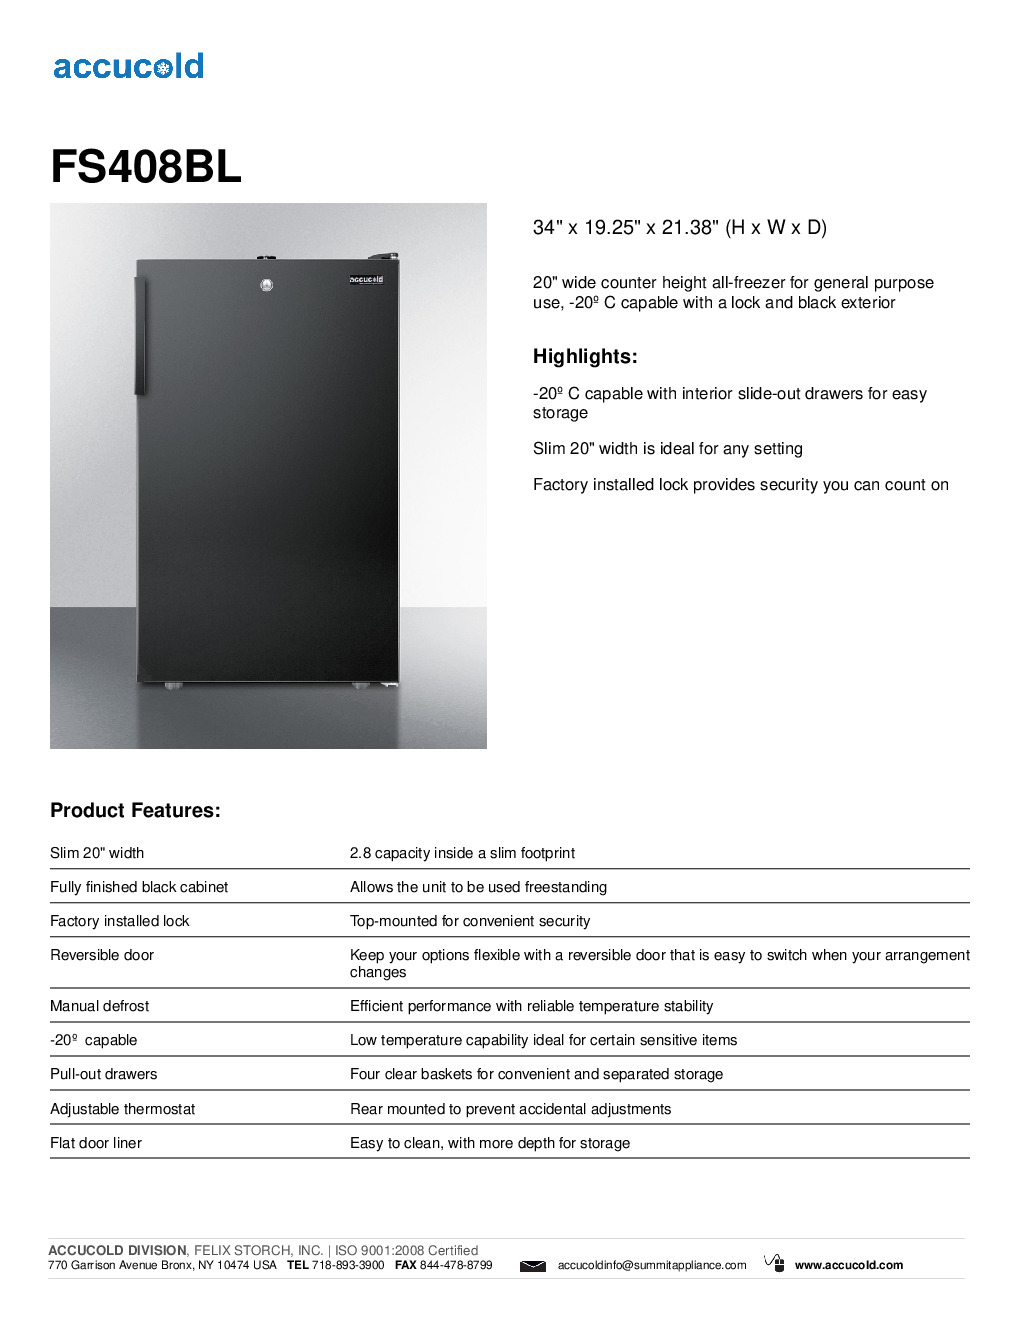 Summit FS408BL Reach-In Undercounter Freezer Discontinued